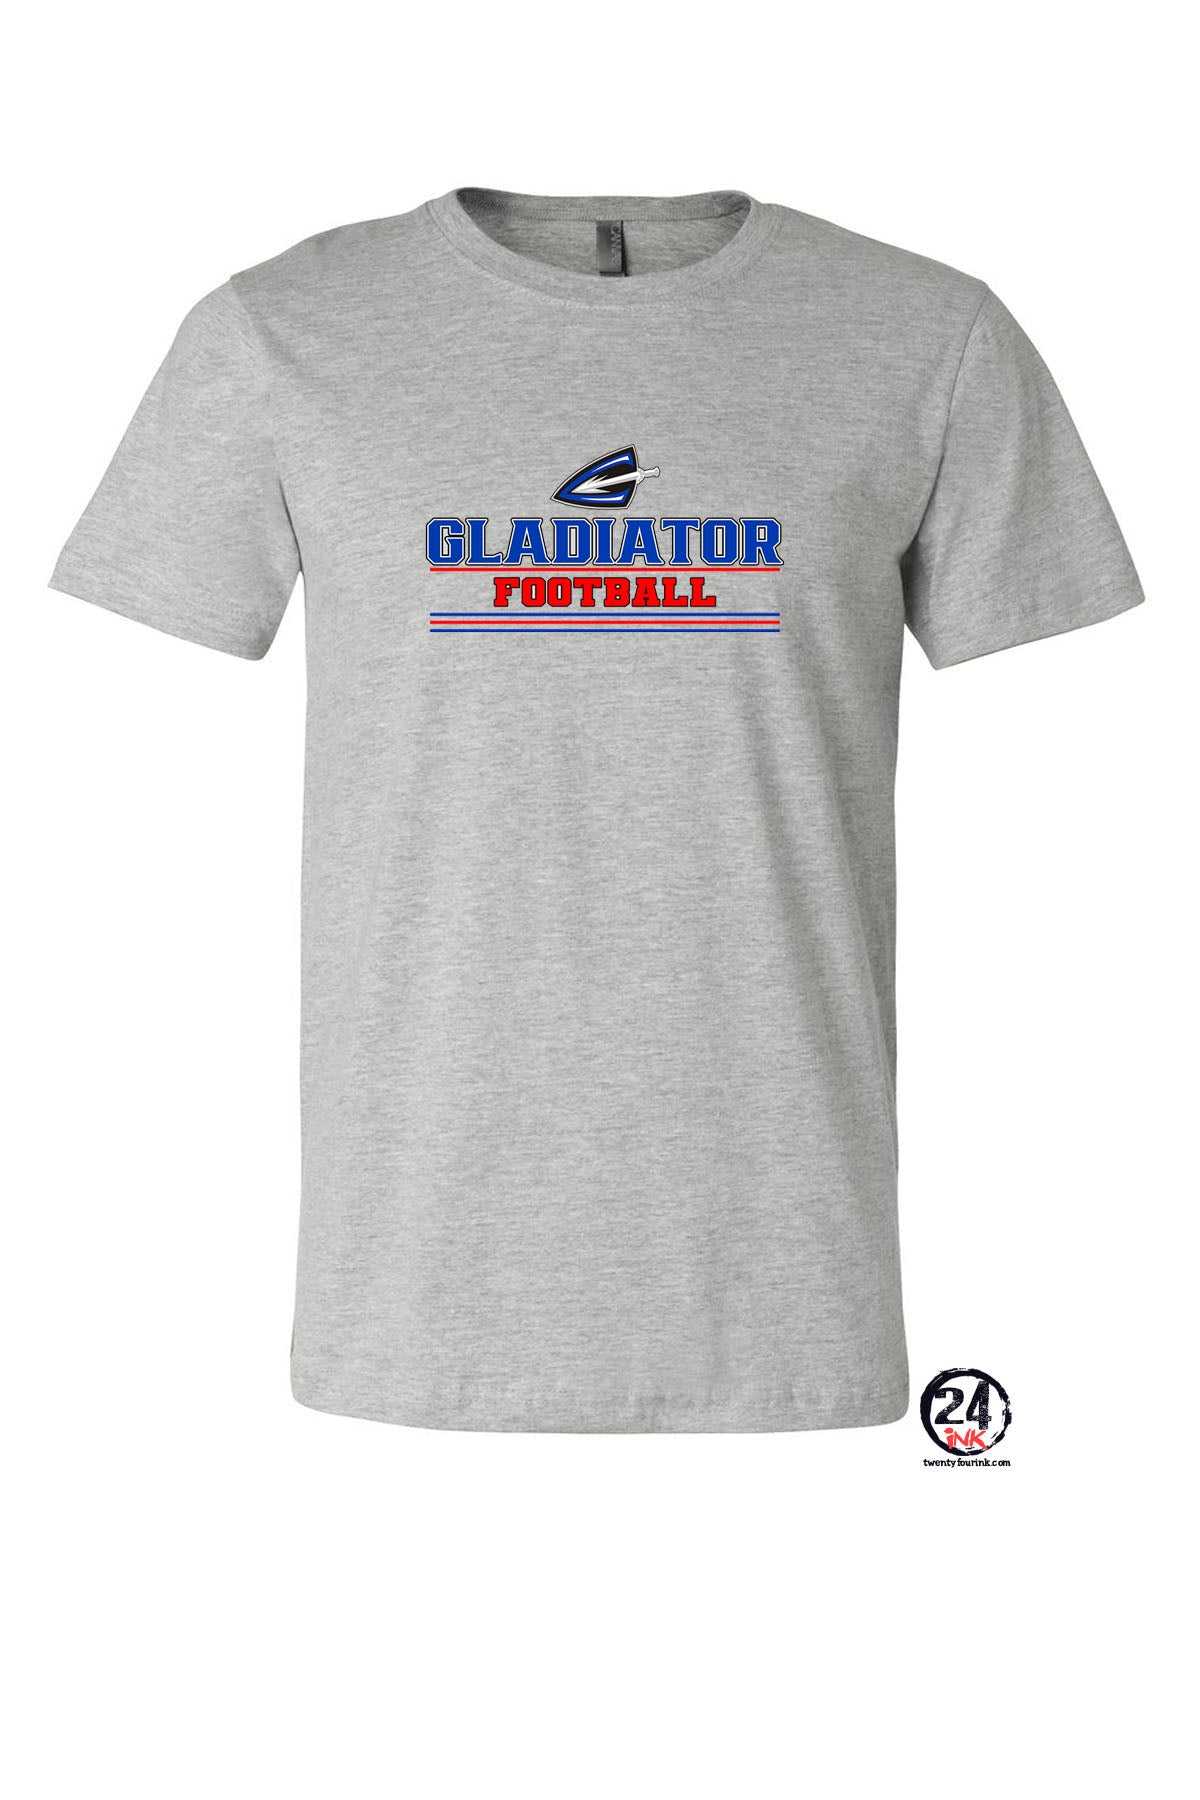 Gladiator Football t-Shirt